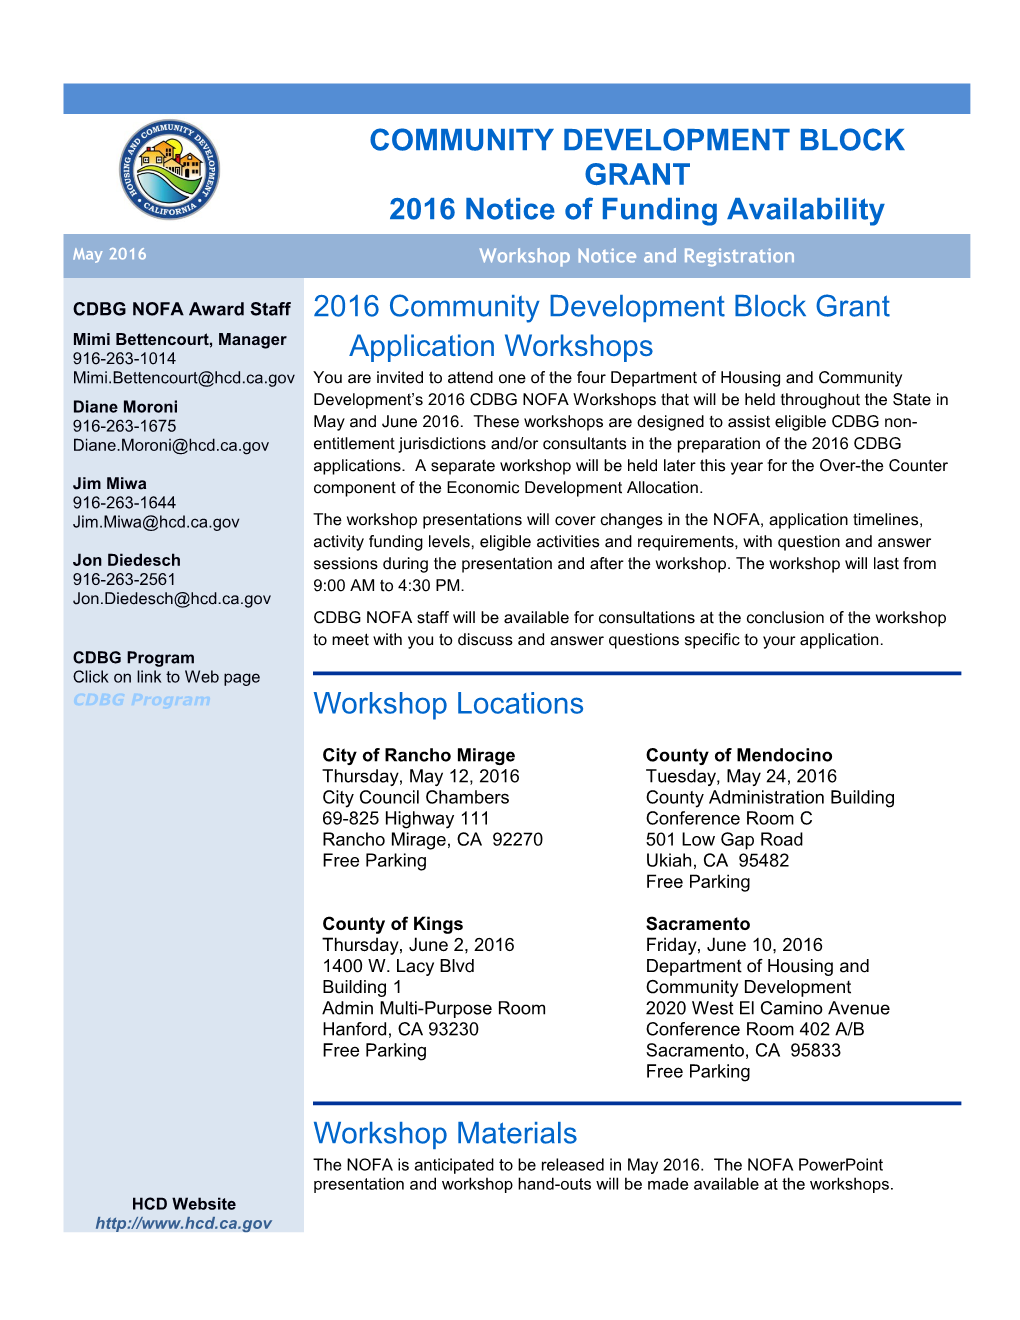 2016 Community Development Block Grant Application Workshops